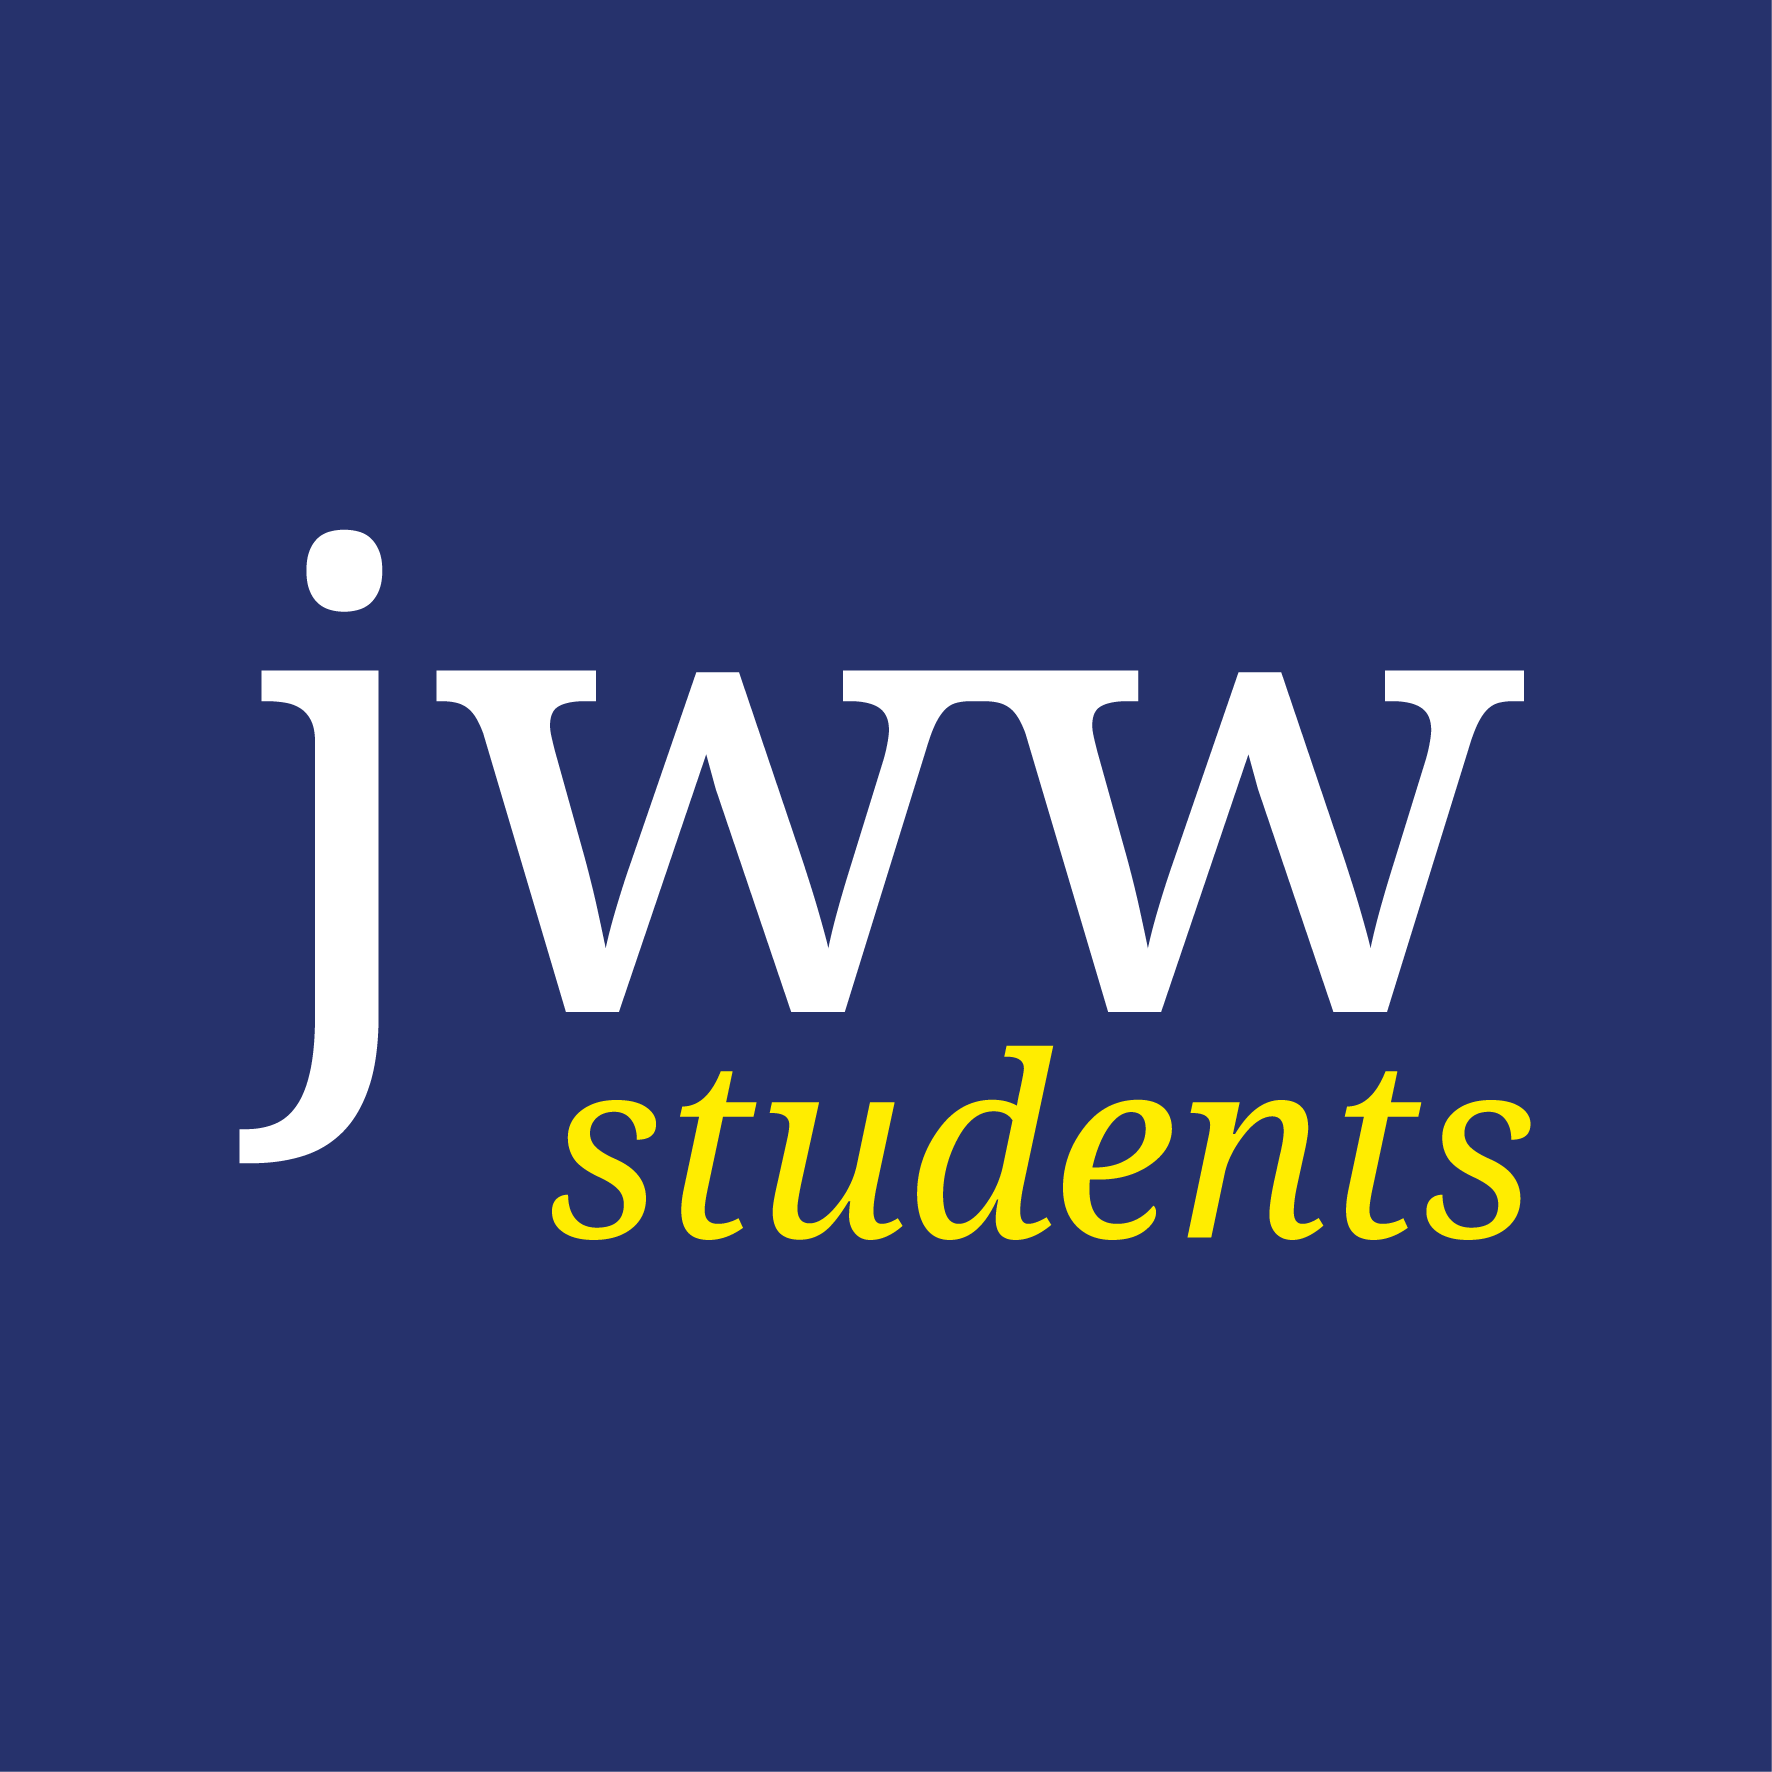 Logo for J W Wood